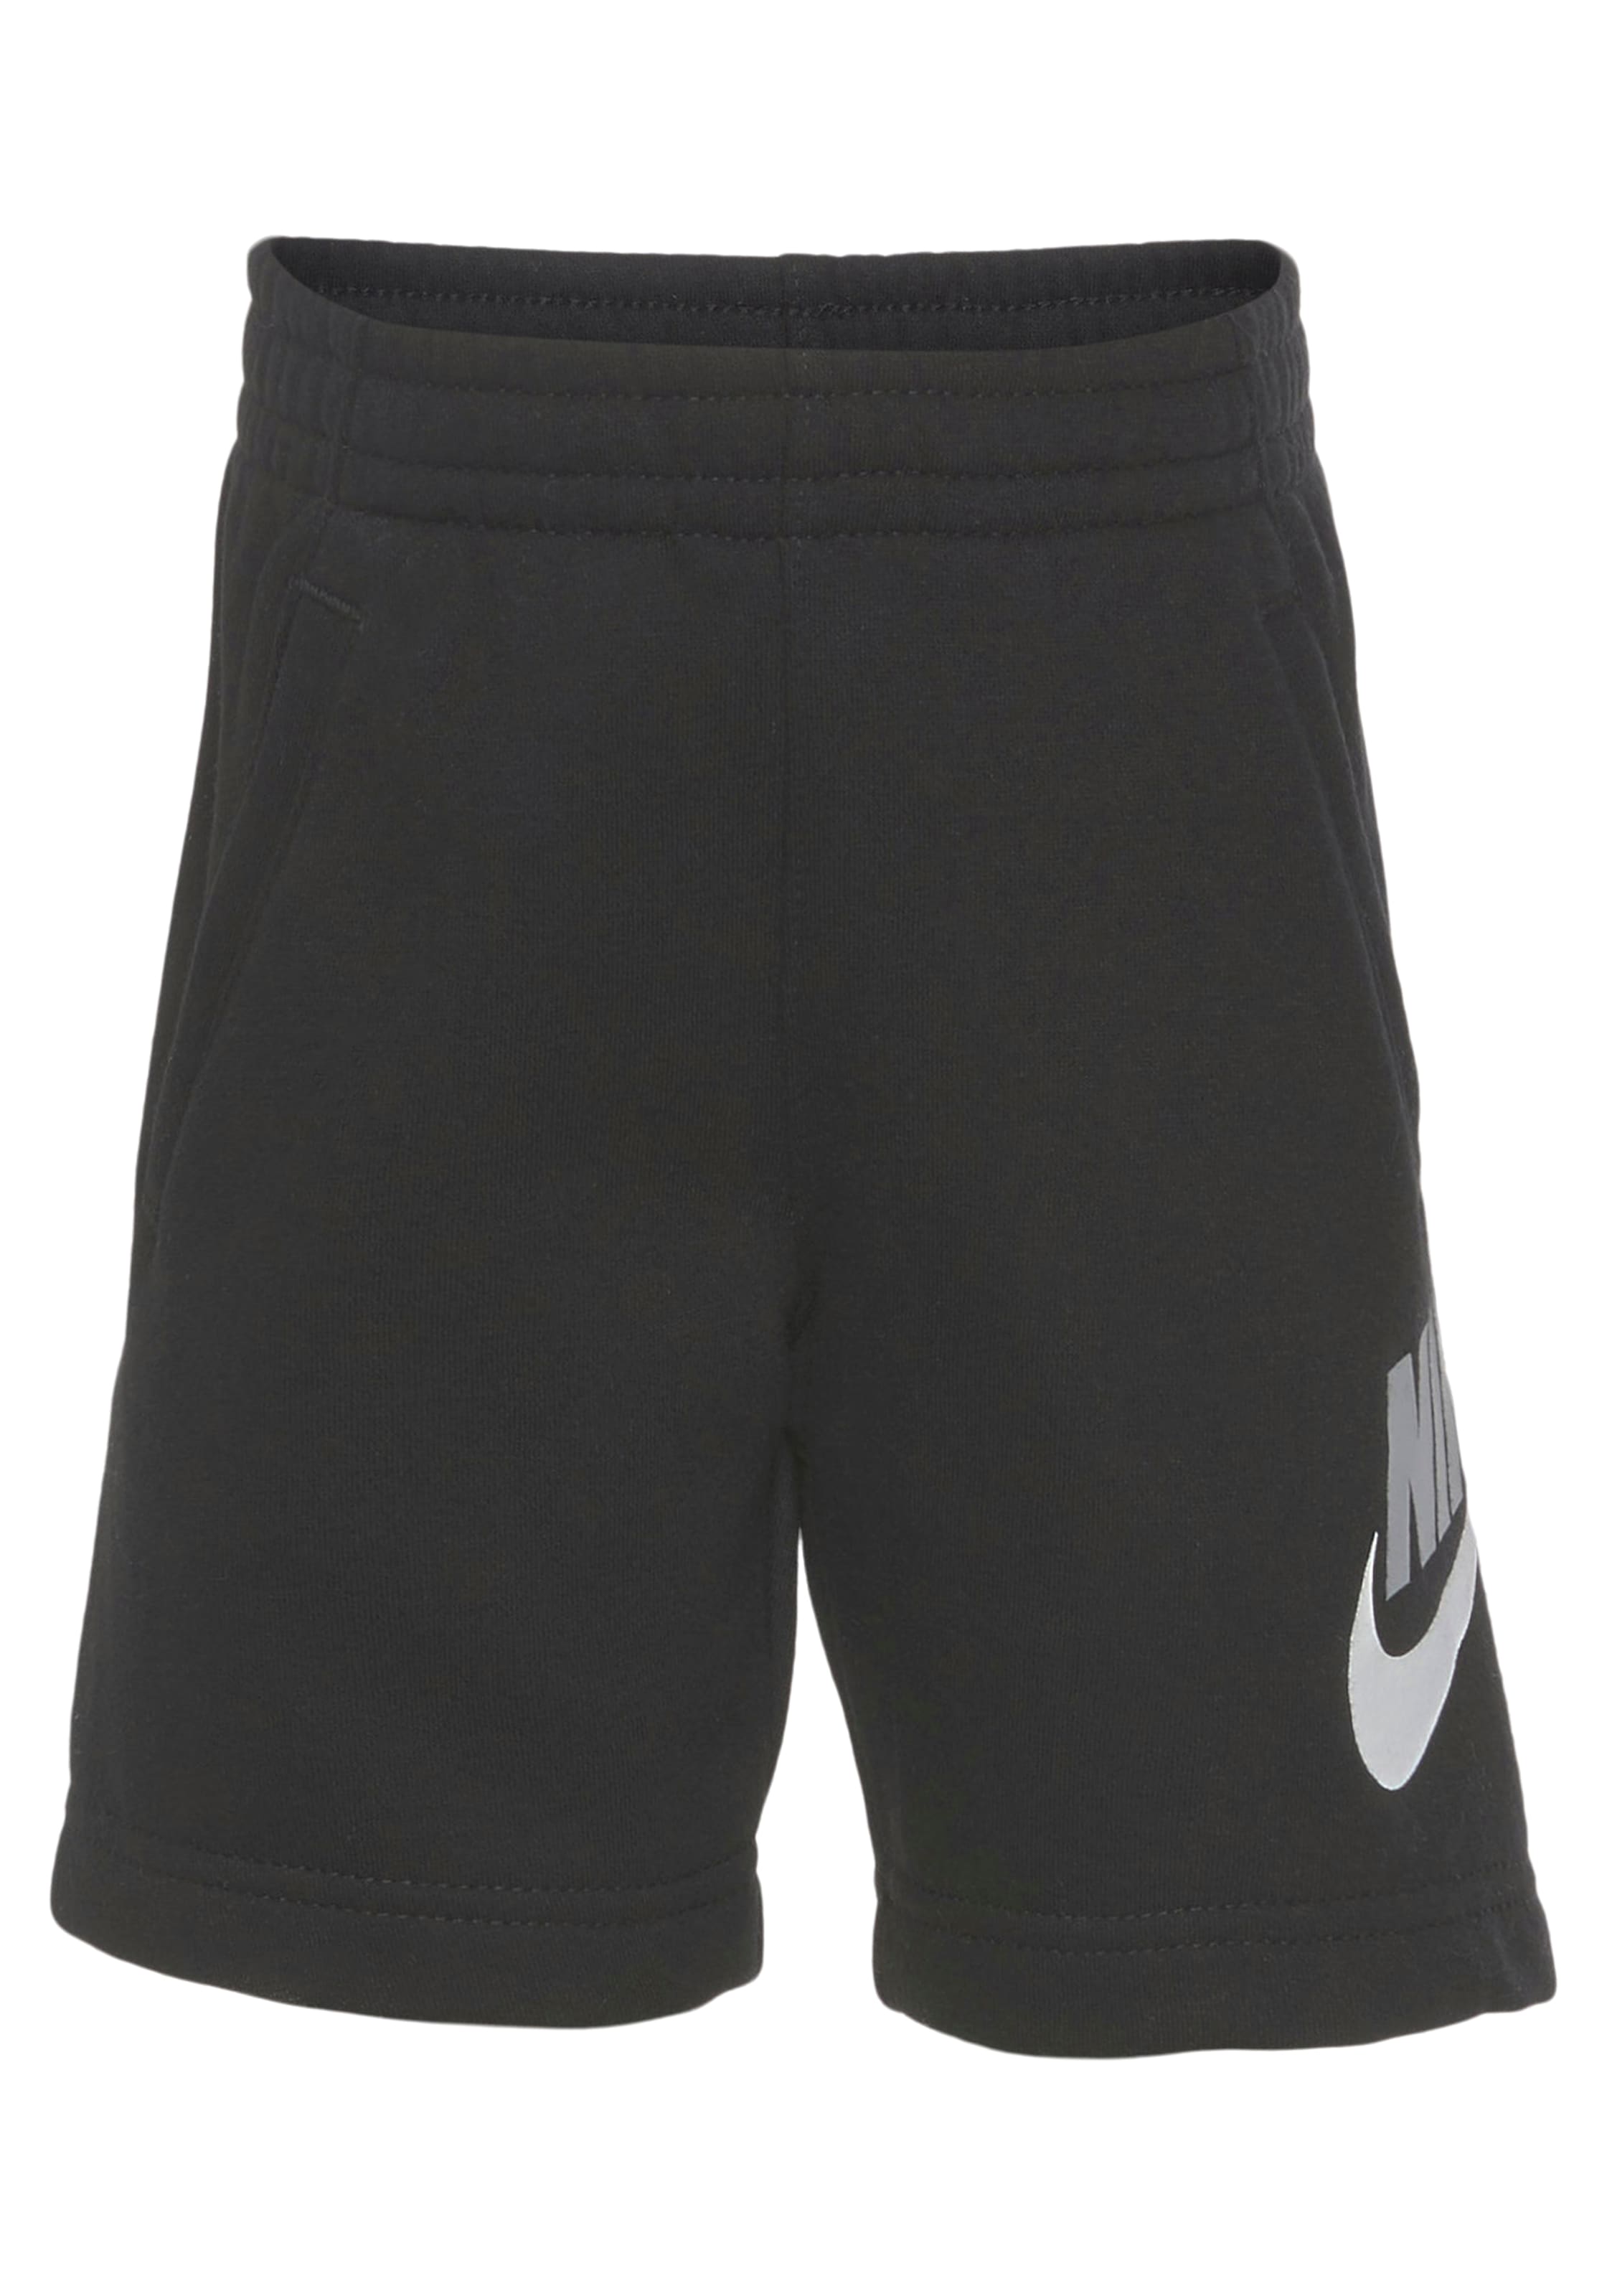 OTTO Nike SHORT« HBR bei FT bestellen Shorts Sportswear »CLUB